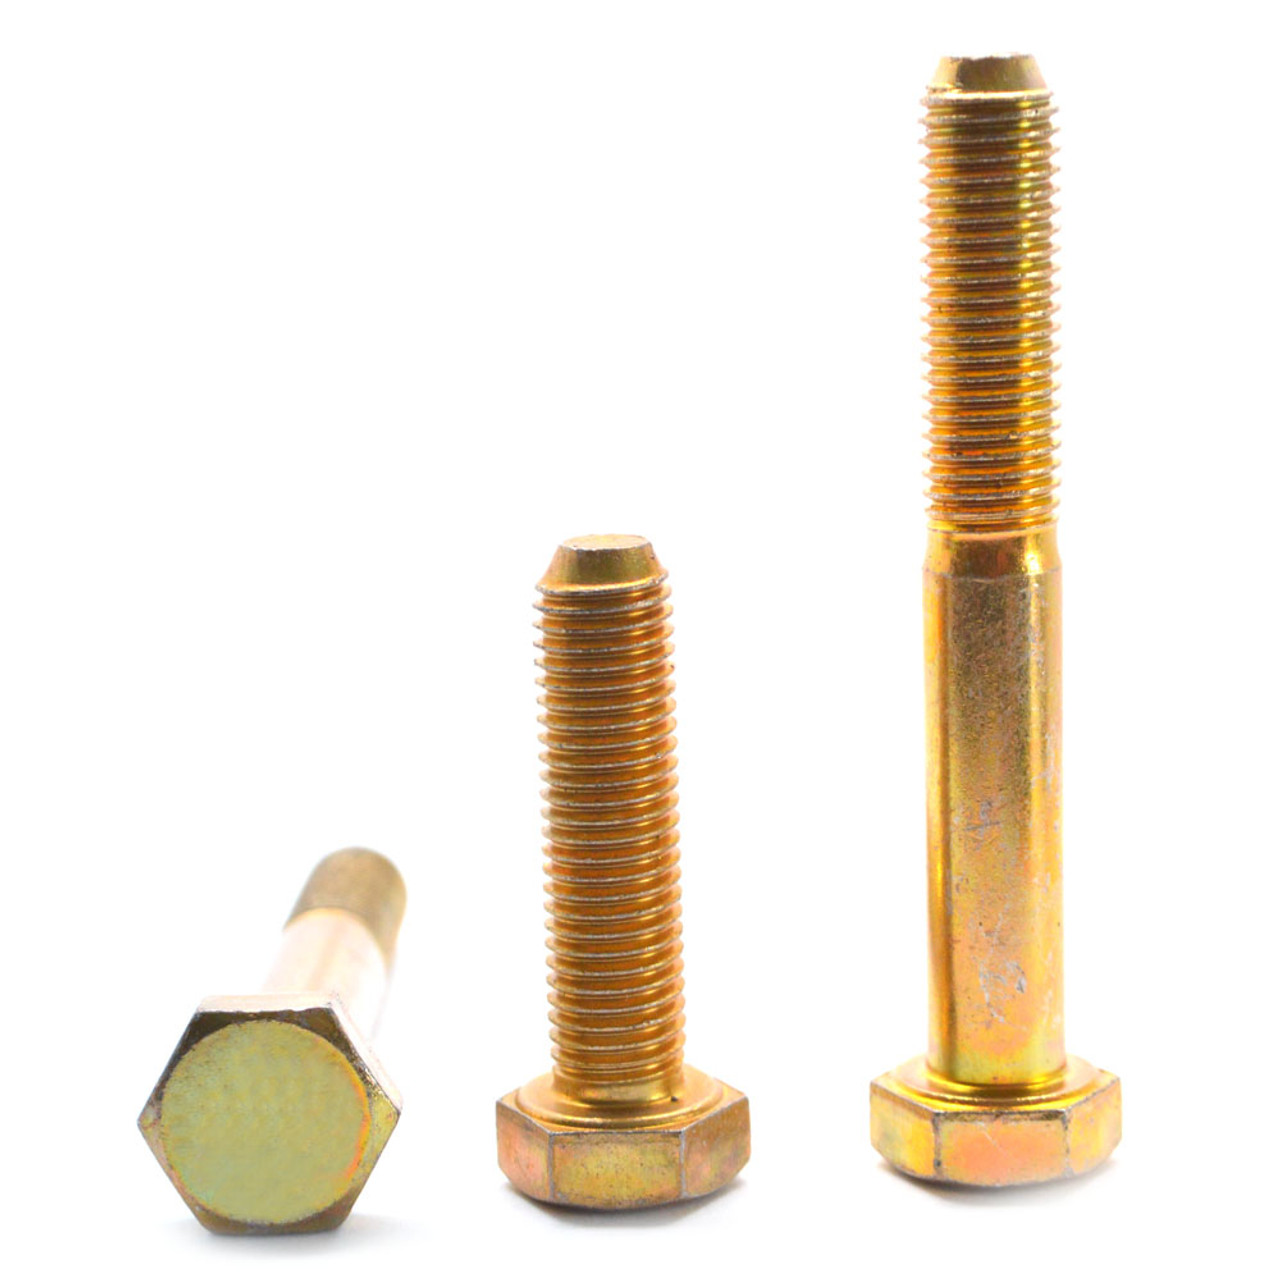 M10 x 1.50 x 110 MM Coarse Thread DIN 931 Class 8.8 Hex Cap Screw (Bolt) Medium Carbon Steel Yellow Zinc Plated